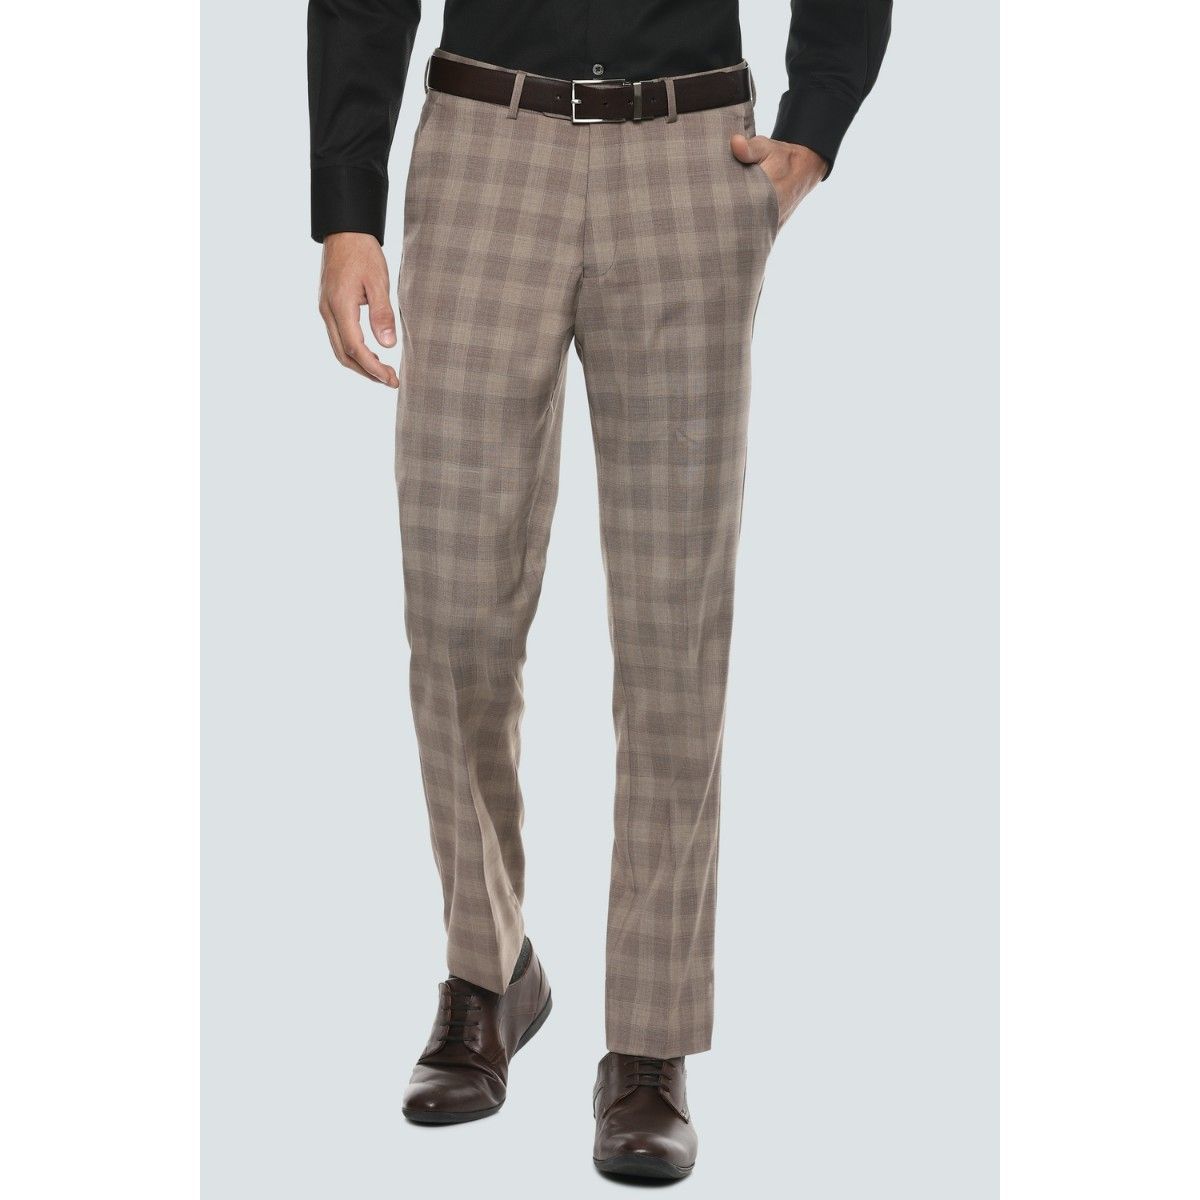 Buy Brown Trousers  Pants for Men by OLD GREY Online  Ajiocom